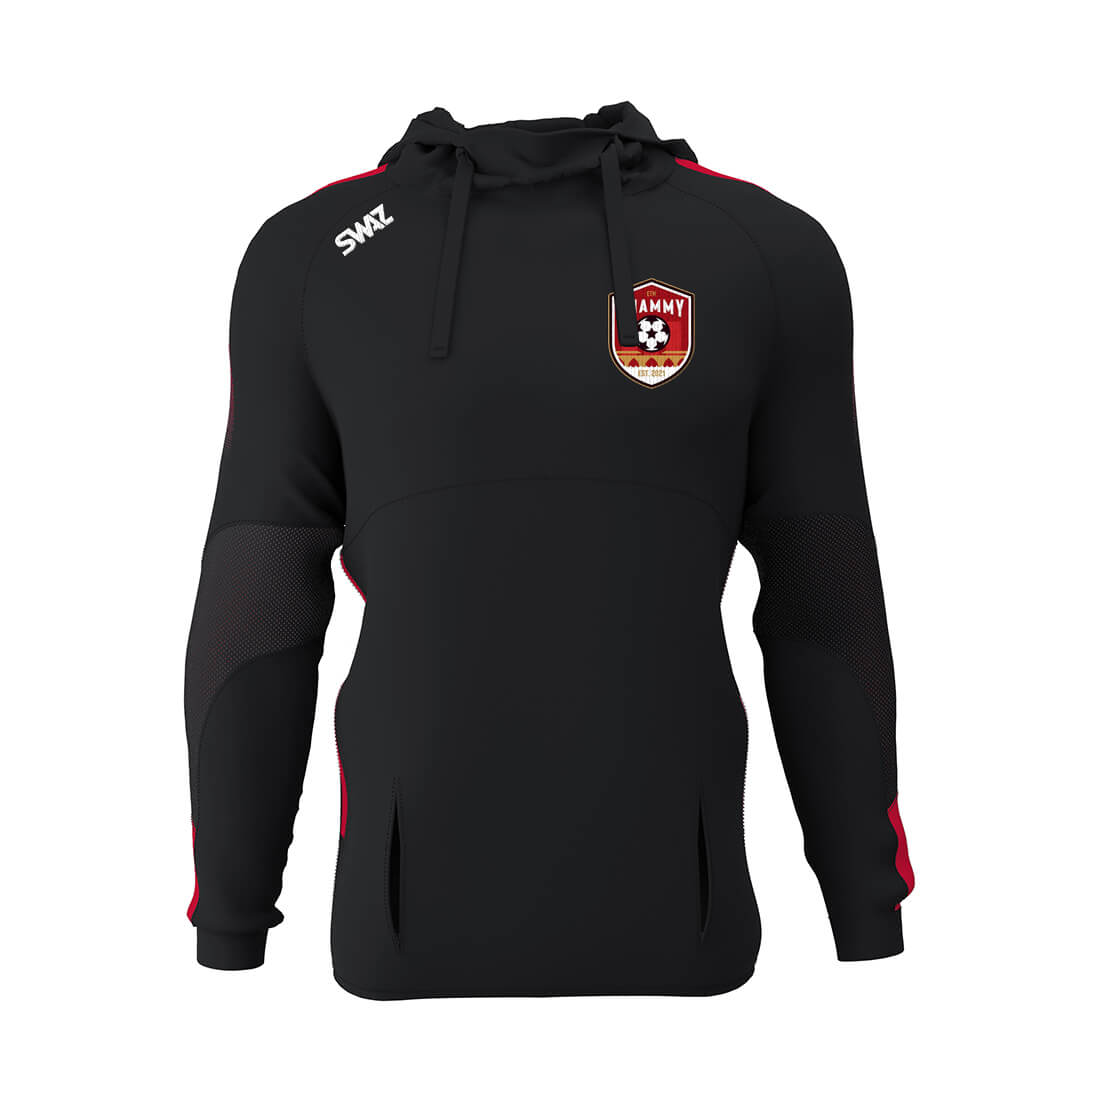 Elite Shammy Rovers Hoody | Football Training Kit and Teamwear – SWAZ